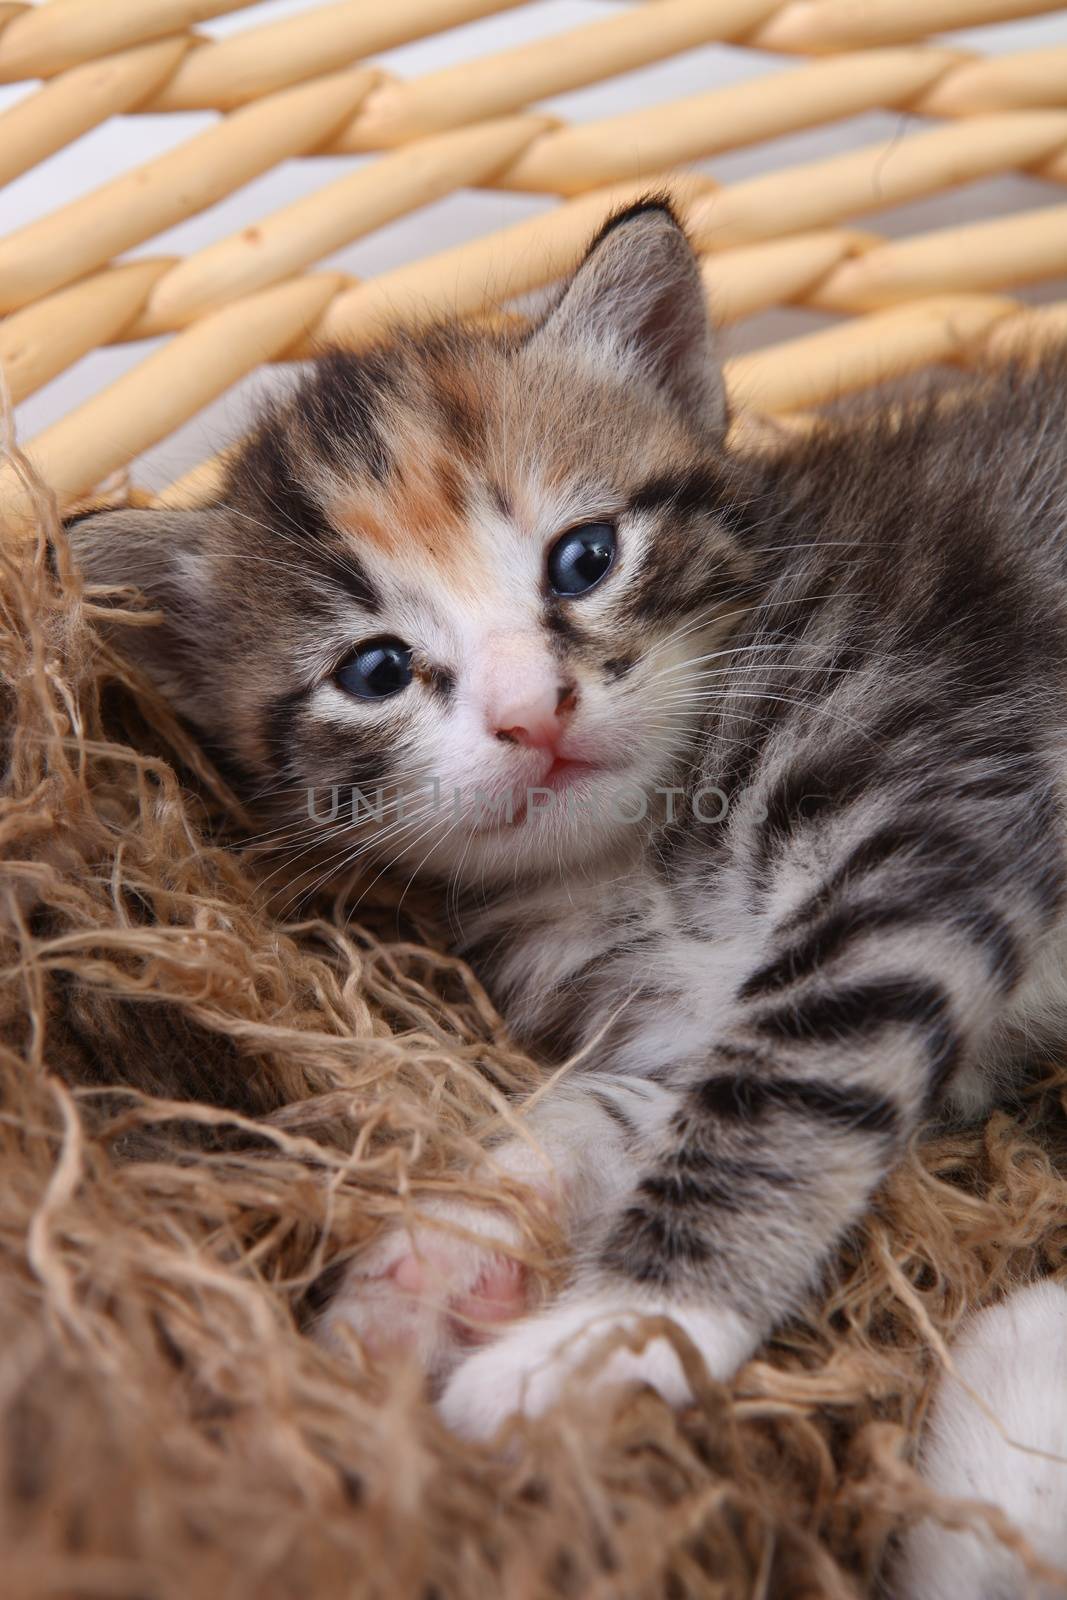 Newborn Kitten in a Basket by tobkatrina